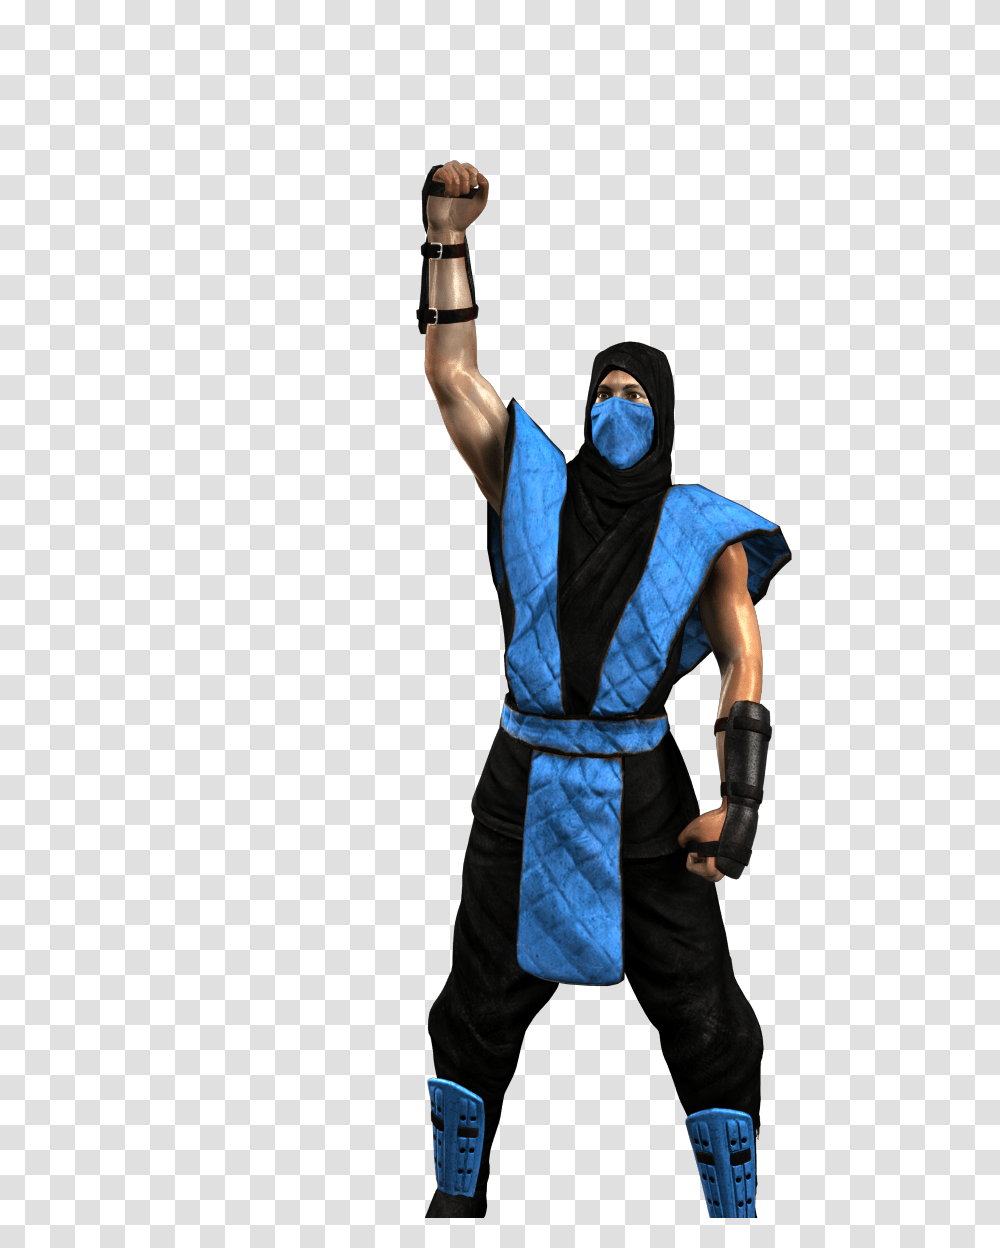 Sub Zero Ending Pose Mortal Kombat Hd Remix With Mugen, Ninja, Person, Costume Transparent Png